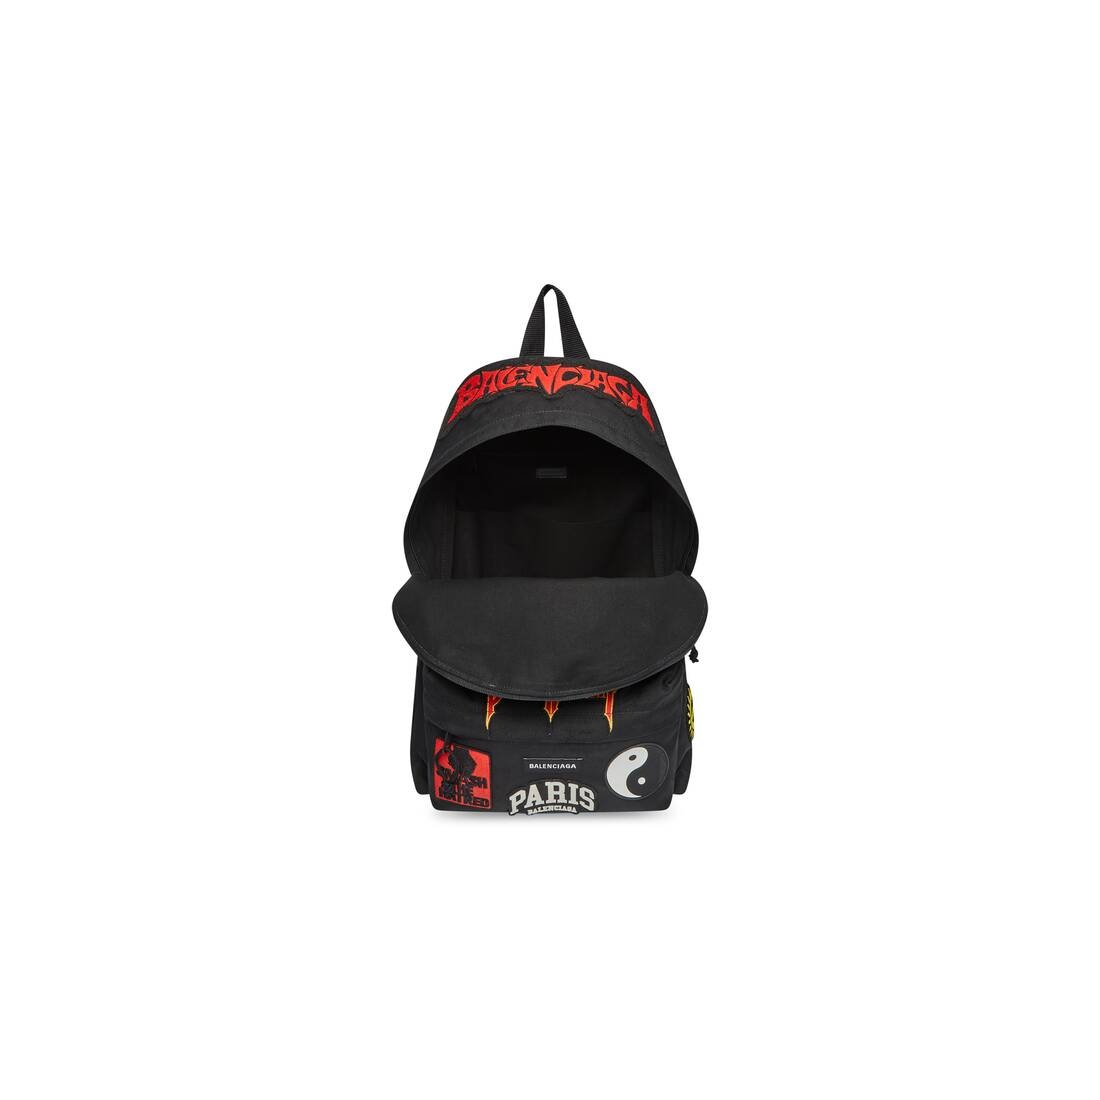 Men's Explorer Backpack in Black - 4